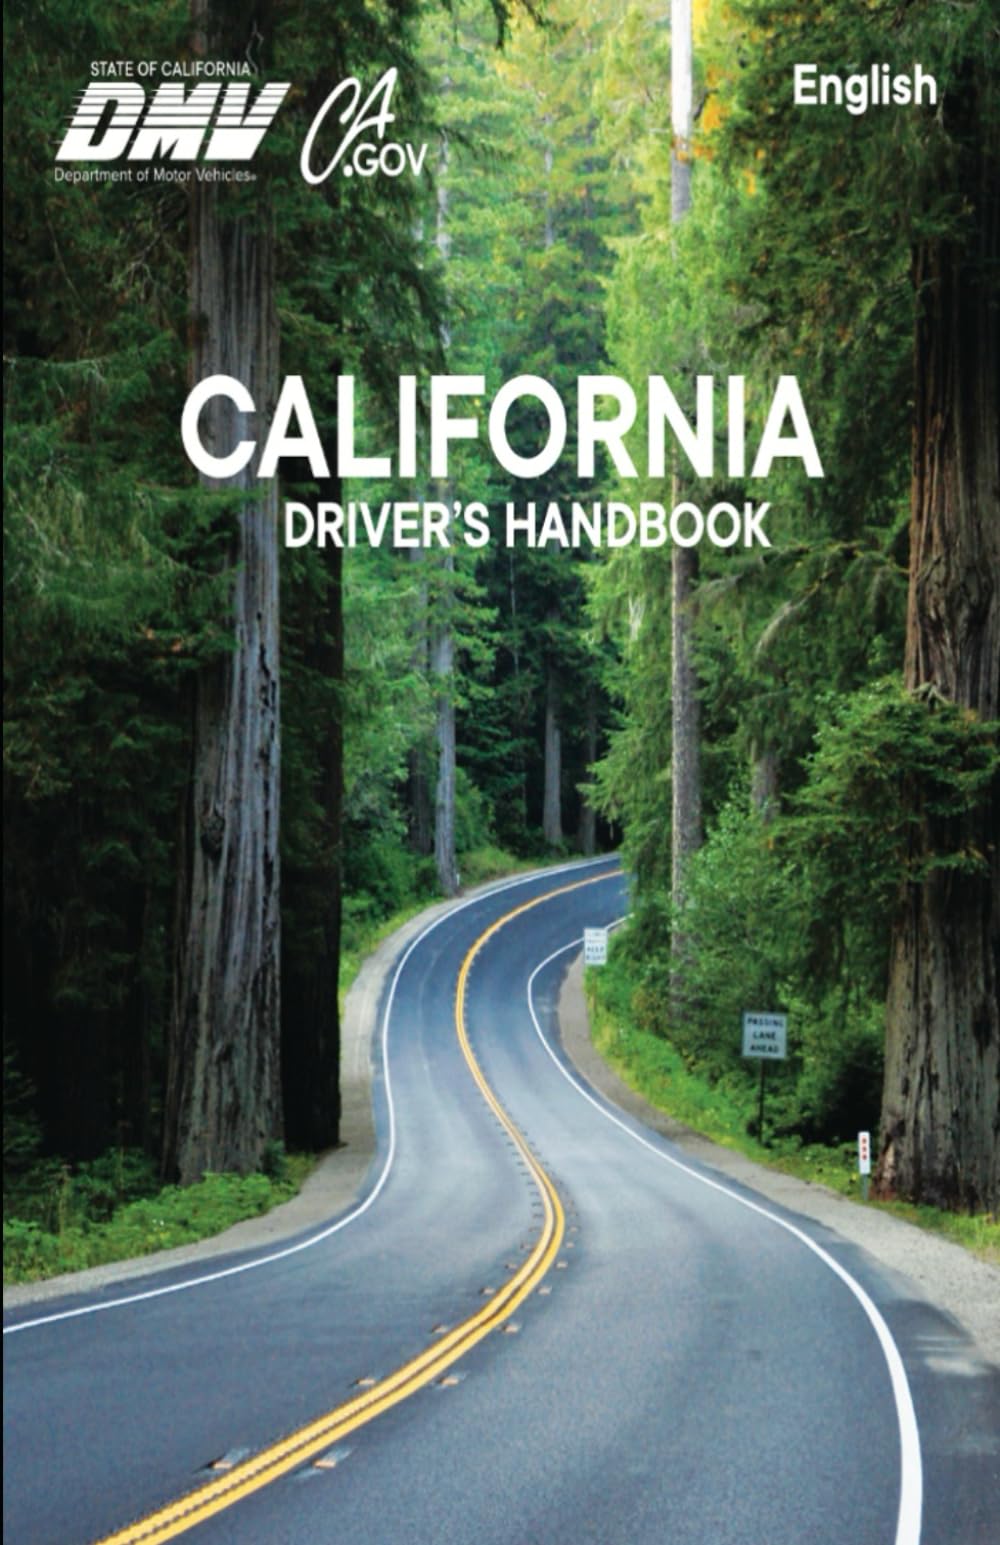 California Driver’s Handbook: Updated, Original and Unabridged DMV Book, California Drivers Handbook (Testing Process, Navigating the Roads, Laws and ... Driver’s Handbooks (English & Spanish))